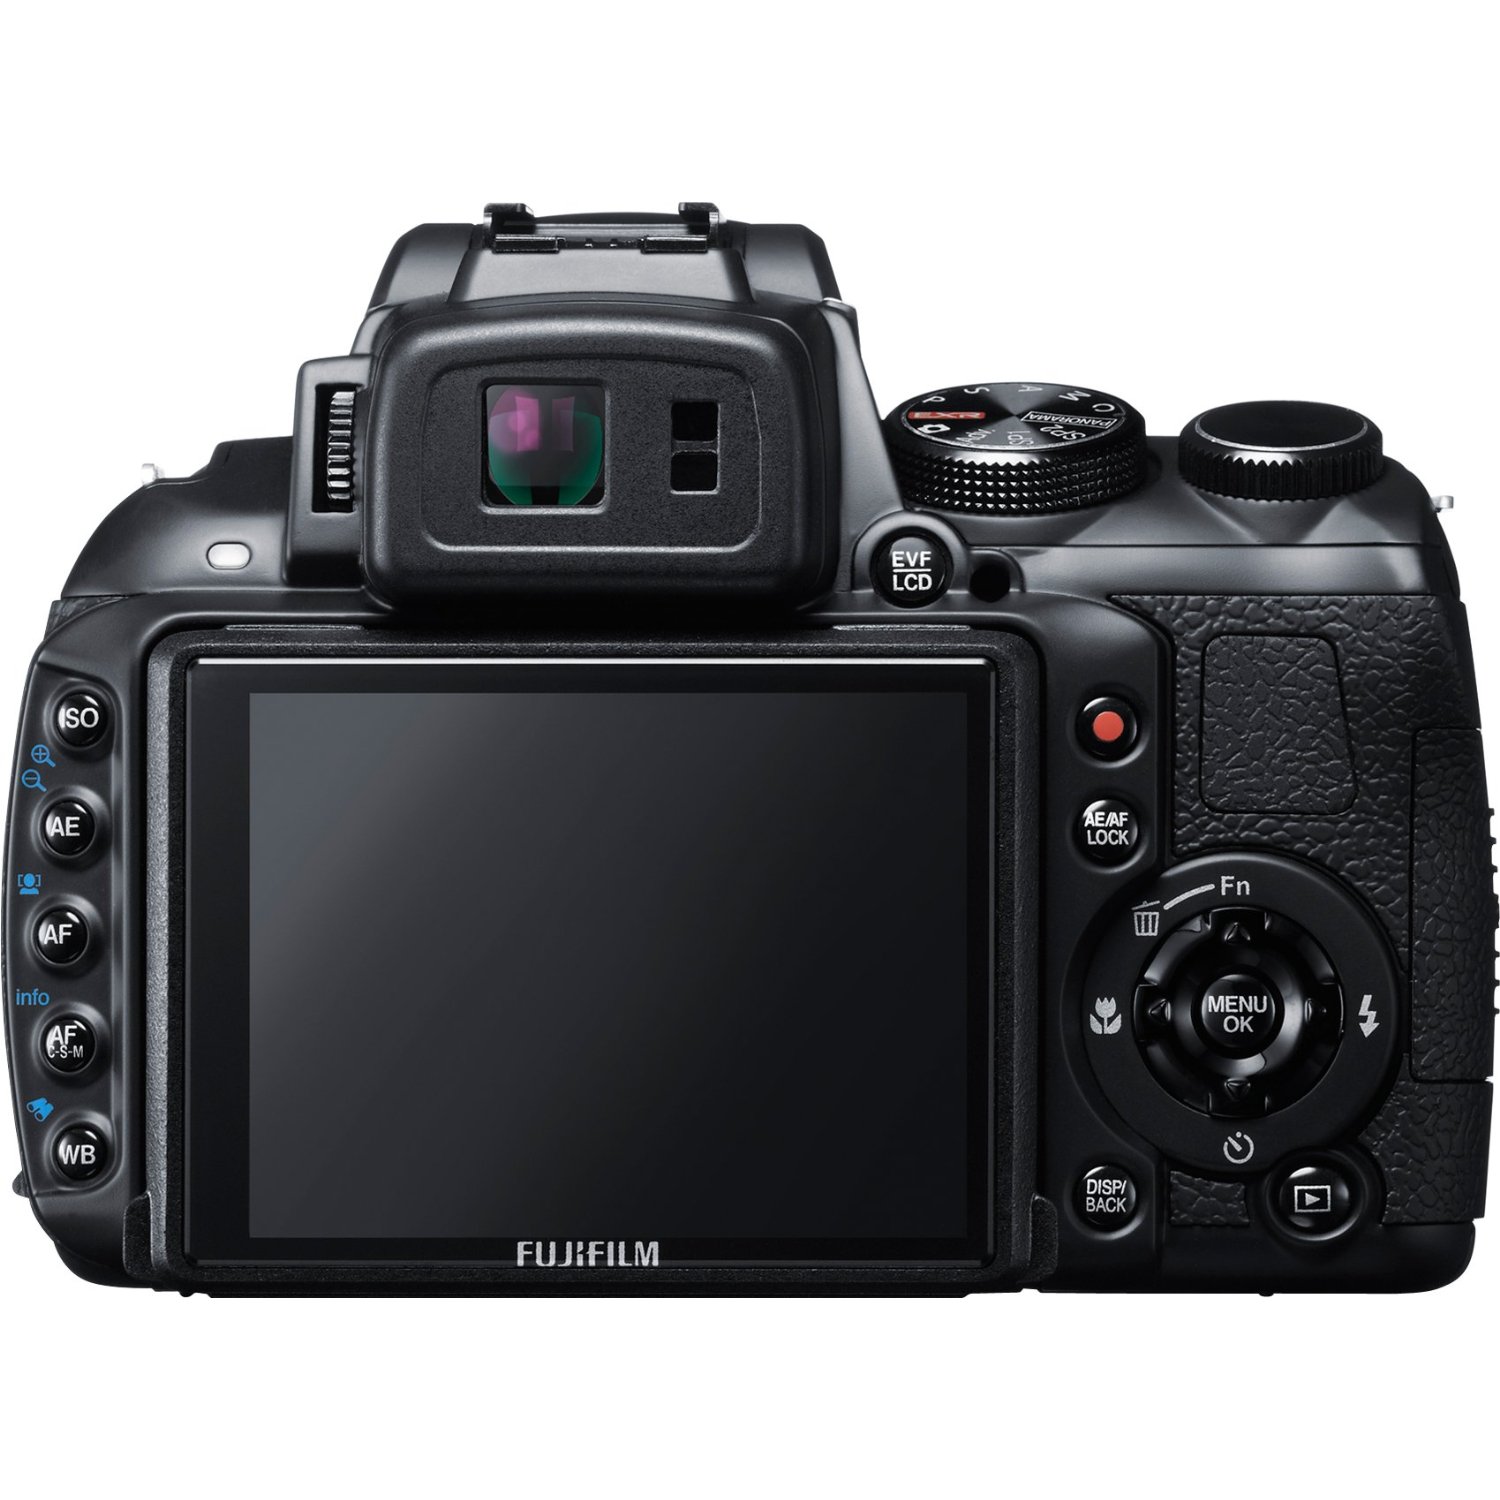 Buy Fujifilm FinePix HS30EXR Digital Camera at Lowest Price | Fujifilm